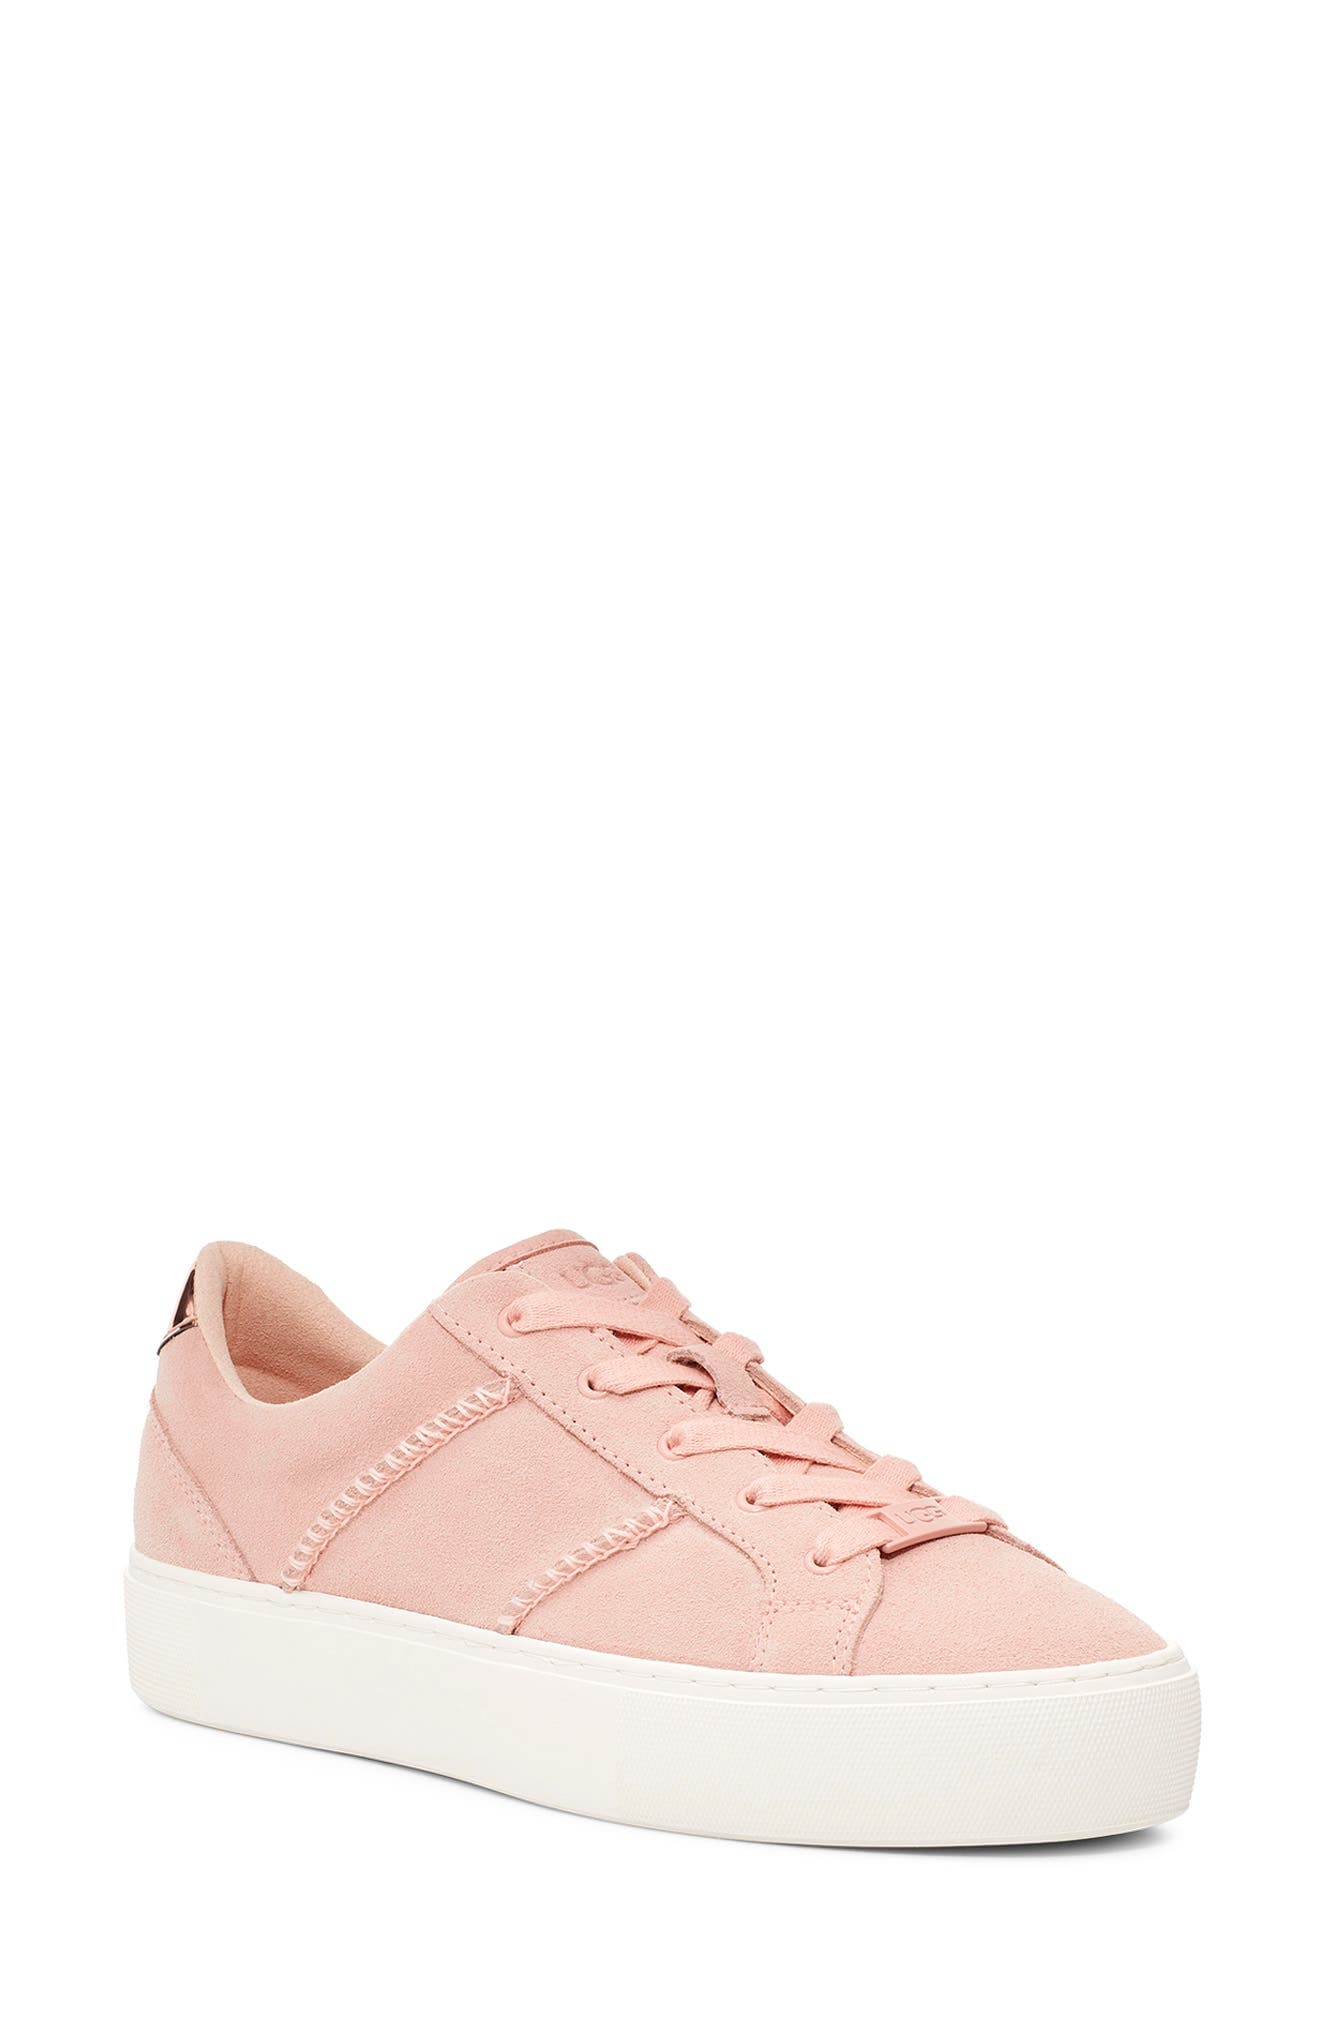 pink ugg tennis shoes